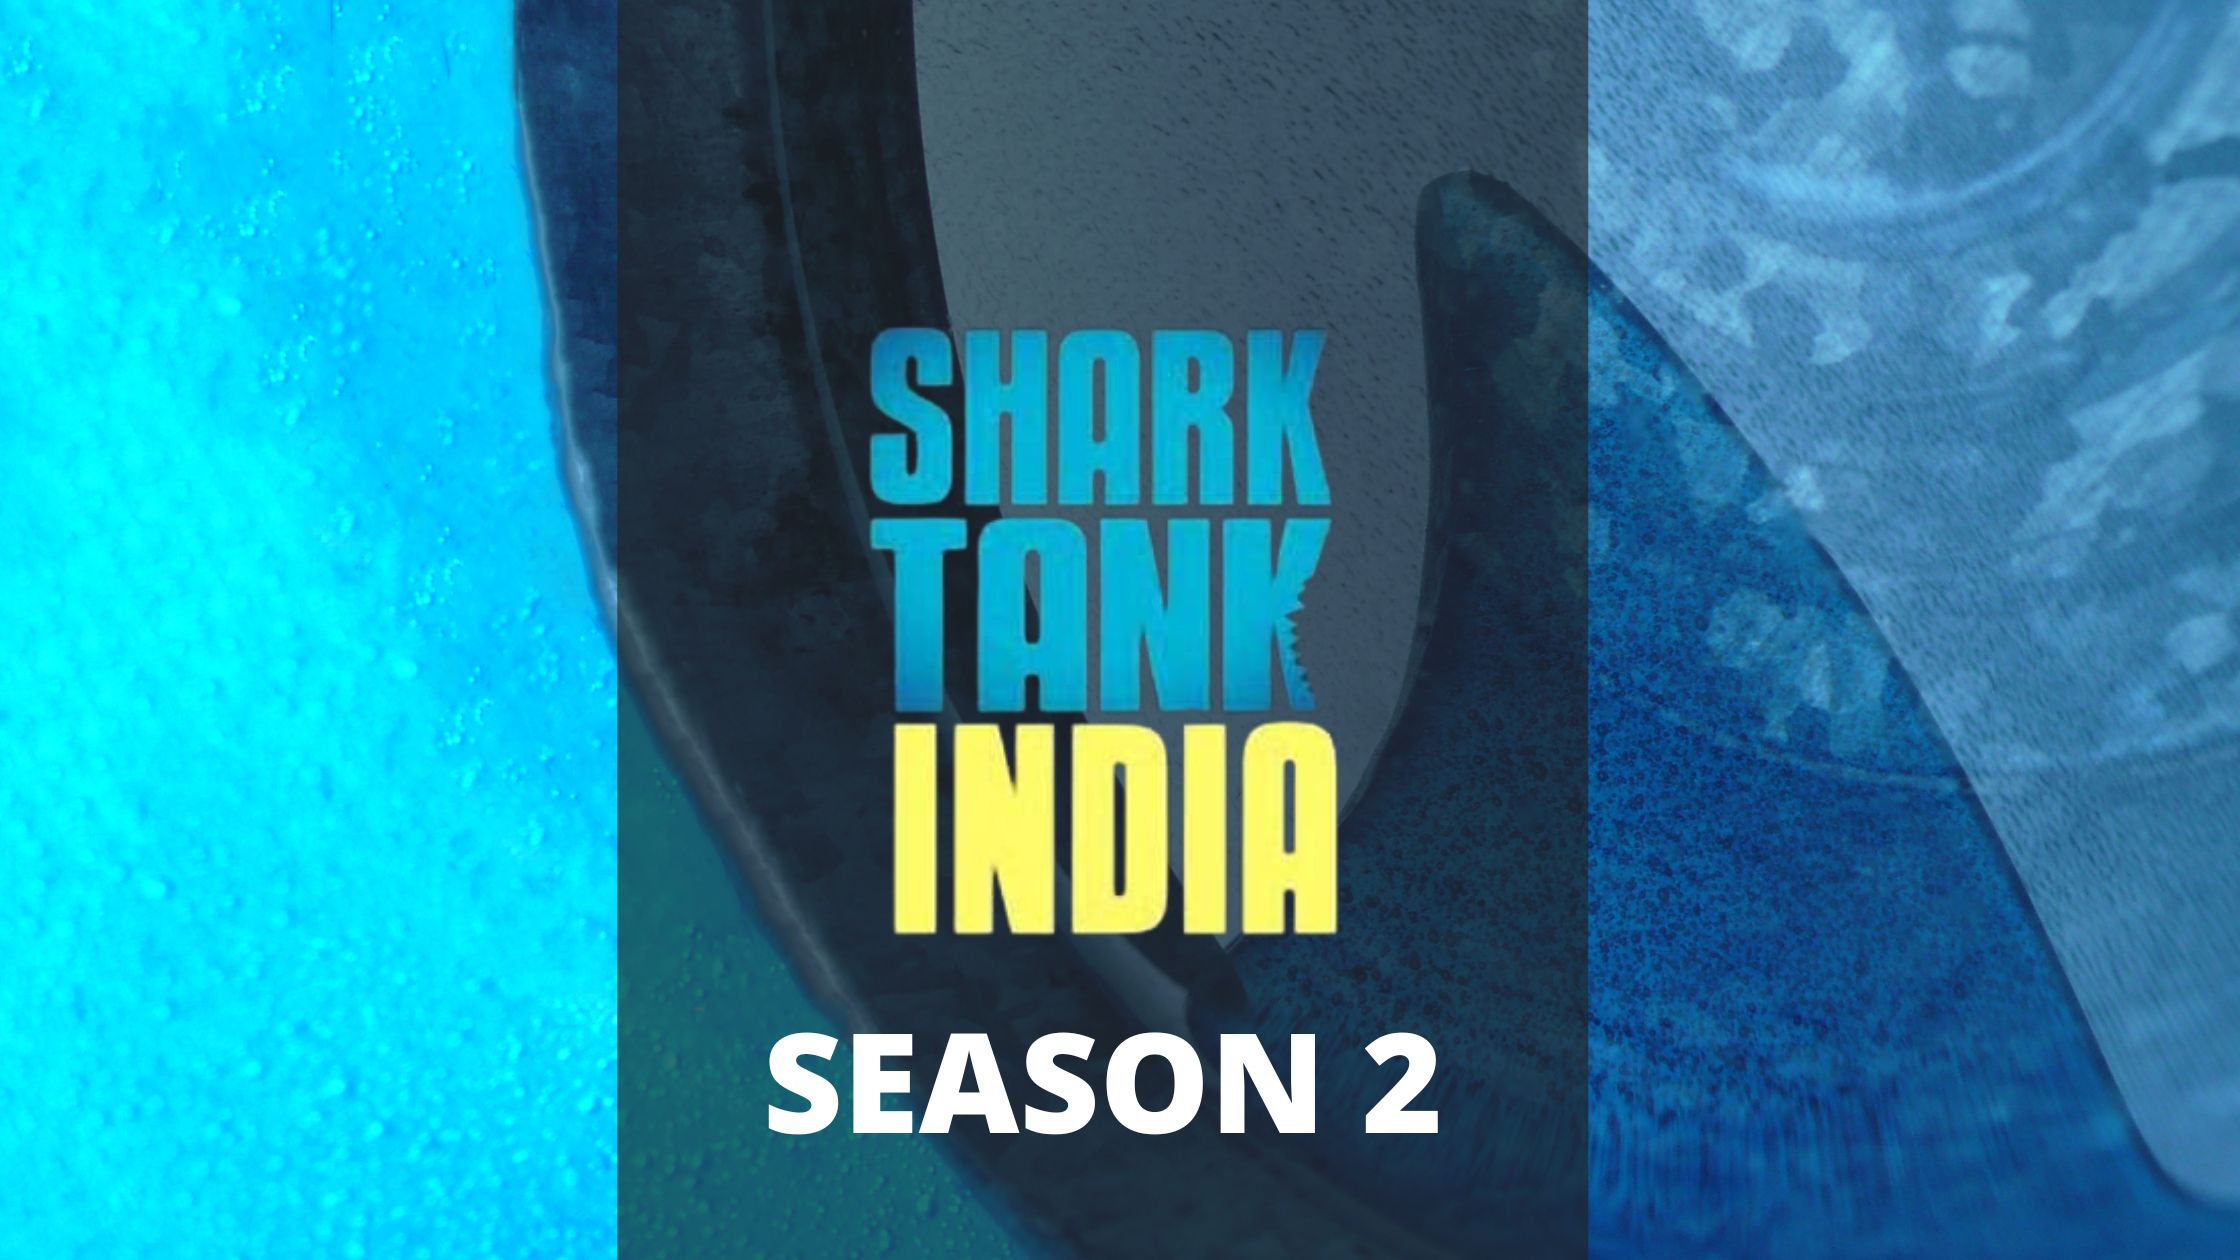 'Shark Tank India Season 2' is back take India into entrepreneurship yet again: A new CEO Replaces Ashneer Grover